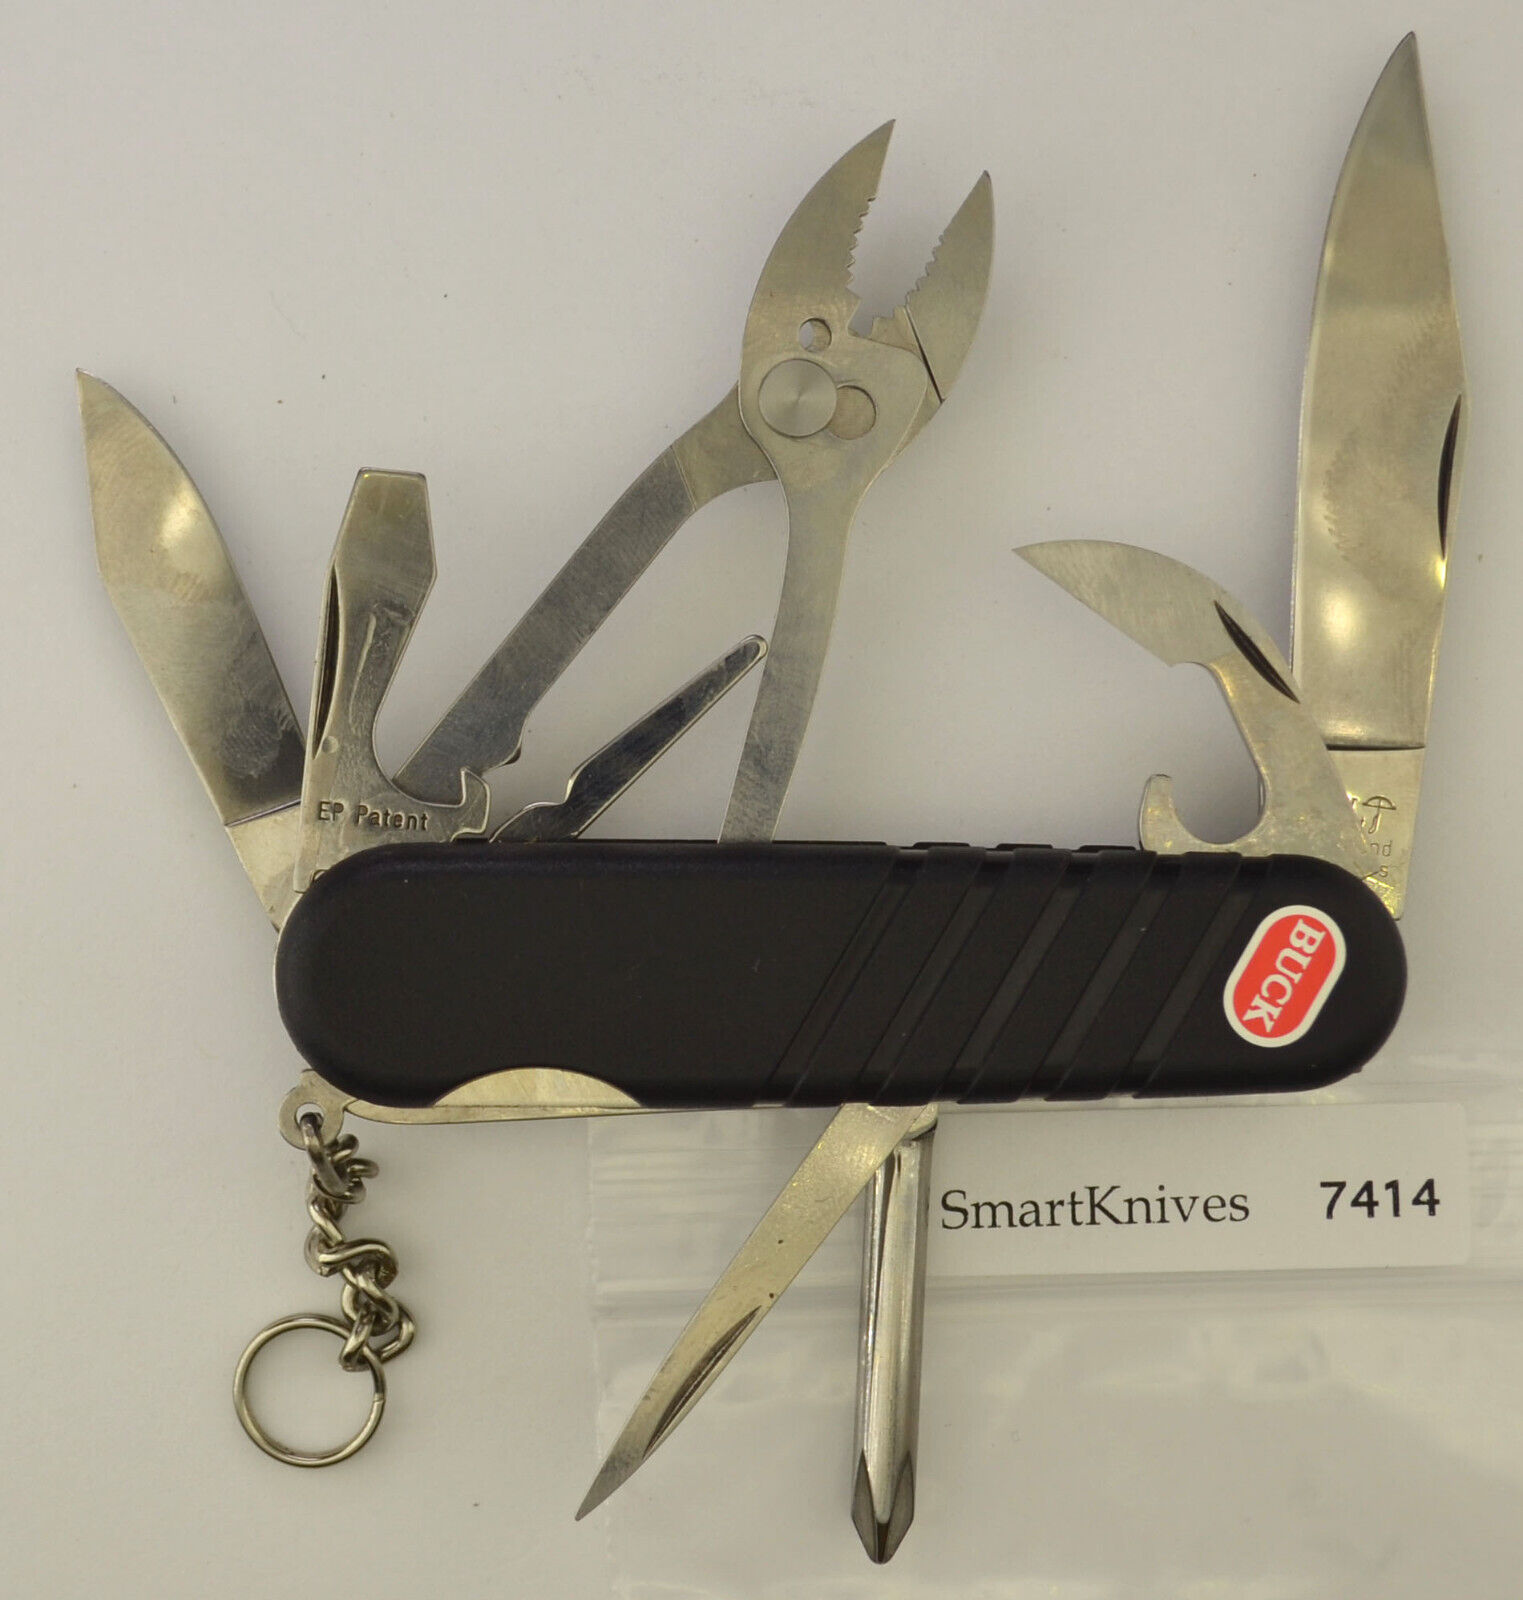 Wenger SwissBuck Taskmate Swiss Army knife (Journeyman)- new boxed NIB #7414